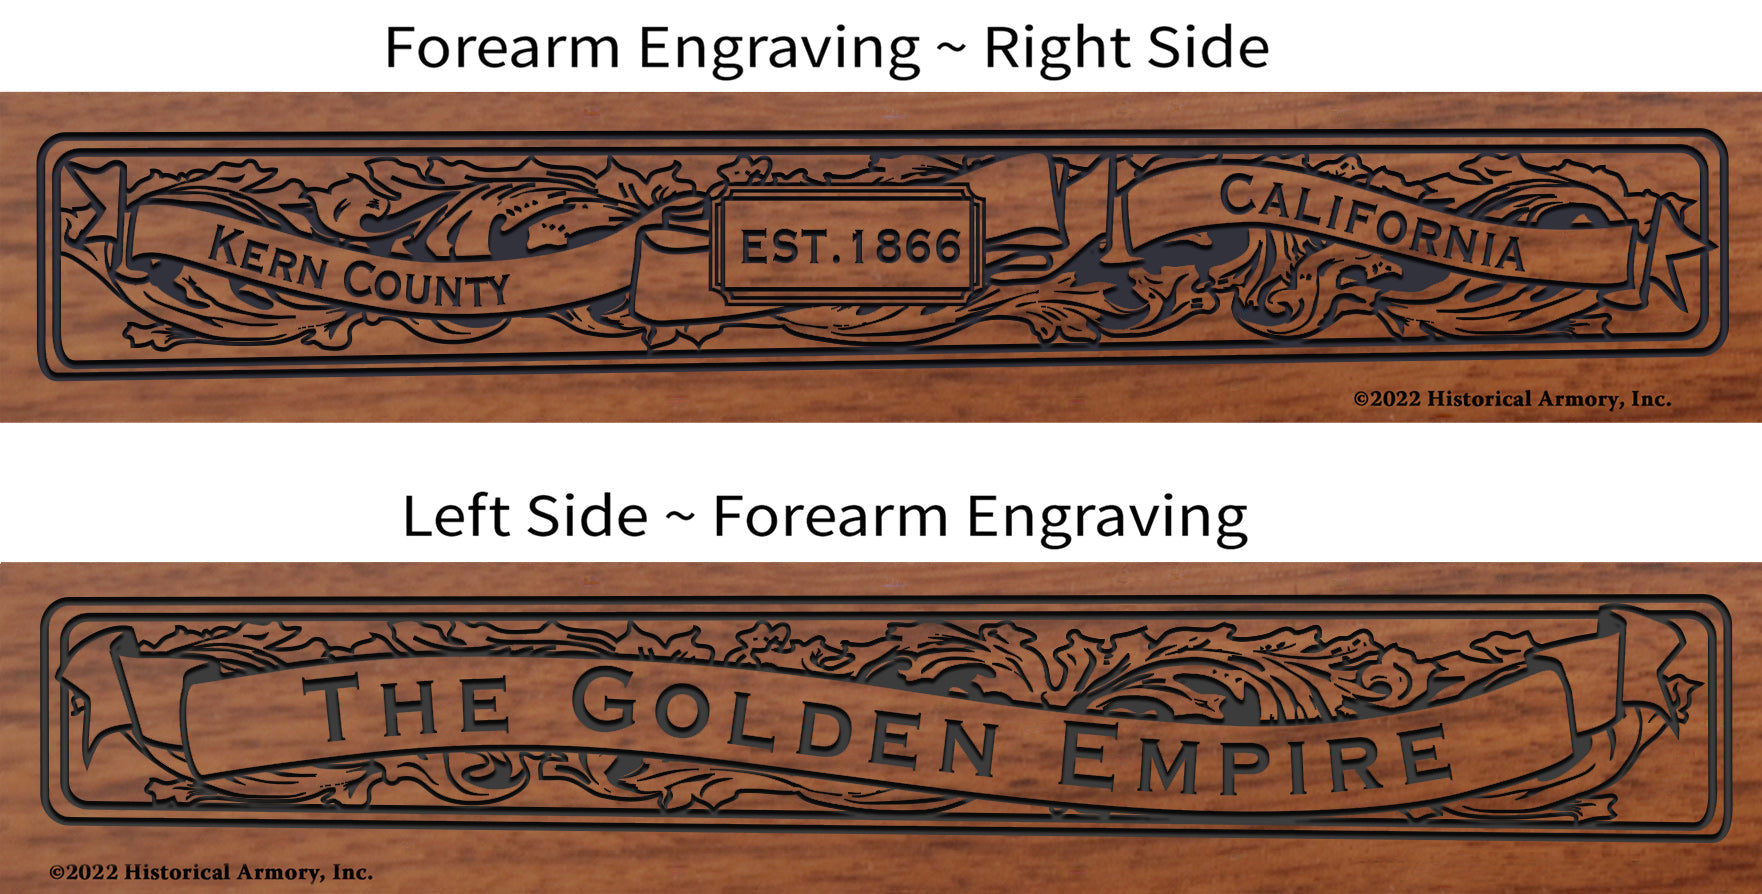 Kern County California Engraved Rifle Forearm